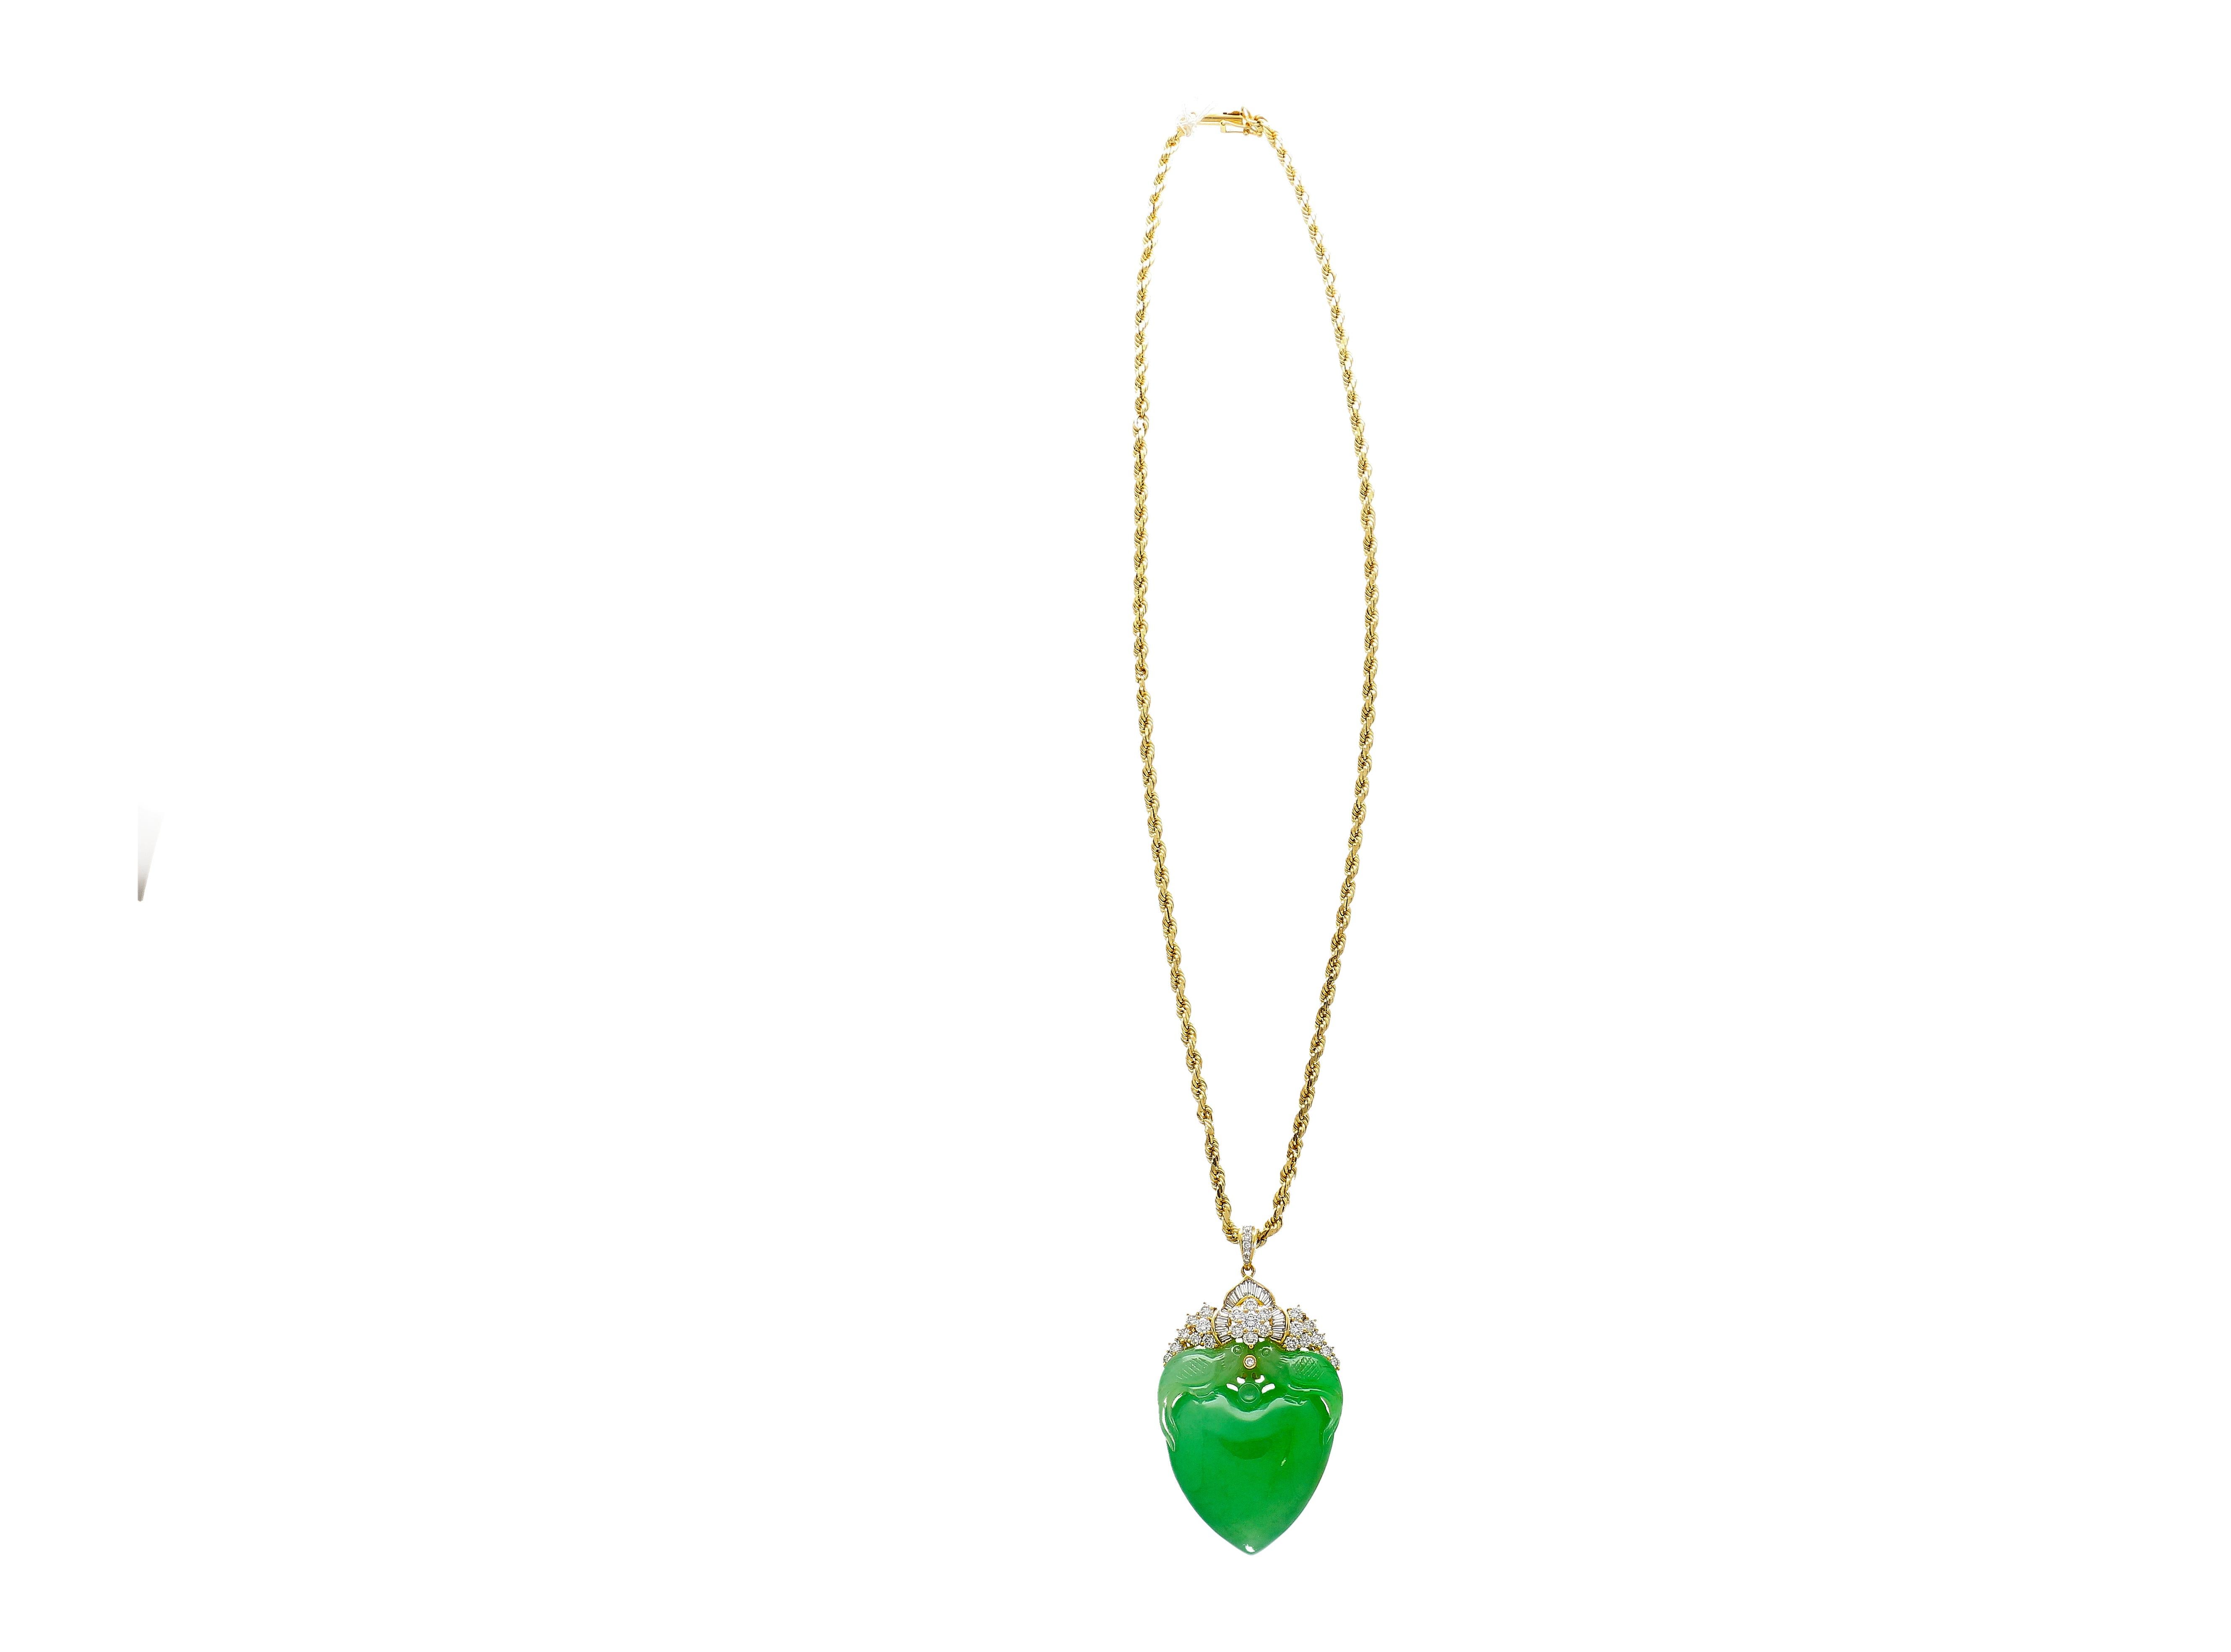 Carved Heart Jadeite Jade Bird Feeding Motif Pendant Necklace in 18k Gold  For Sale 1